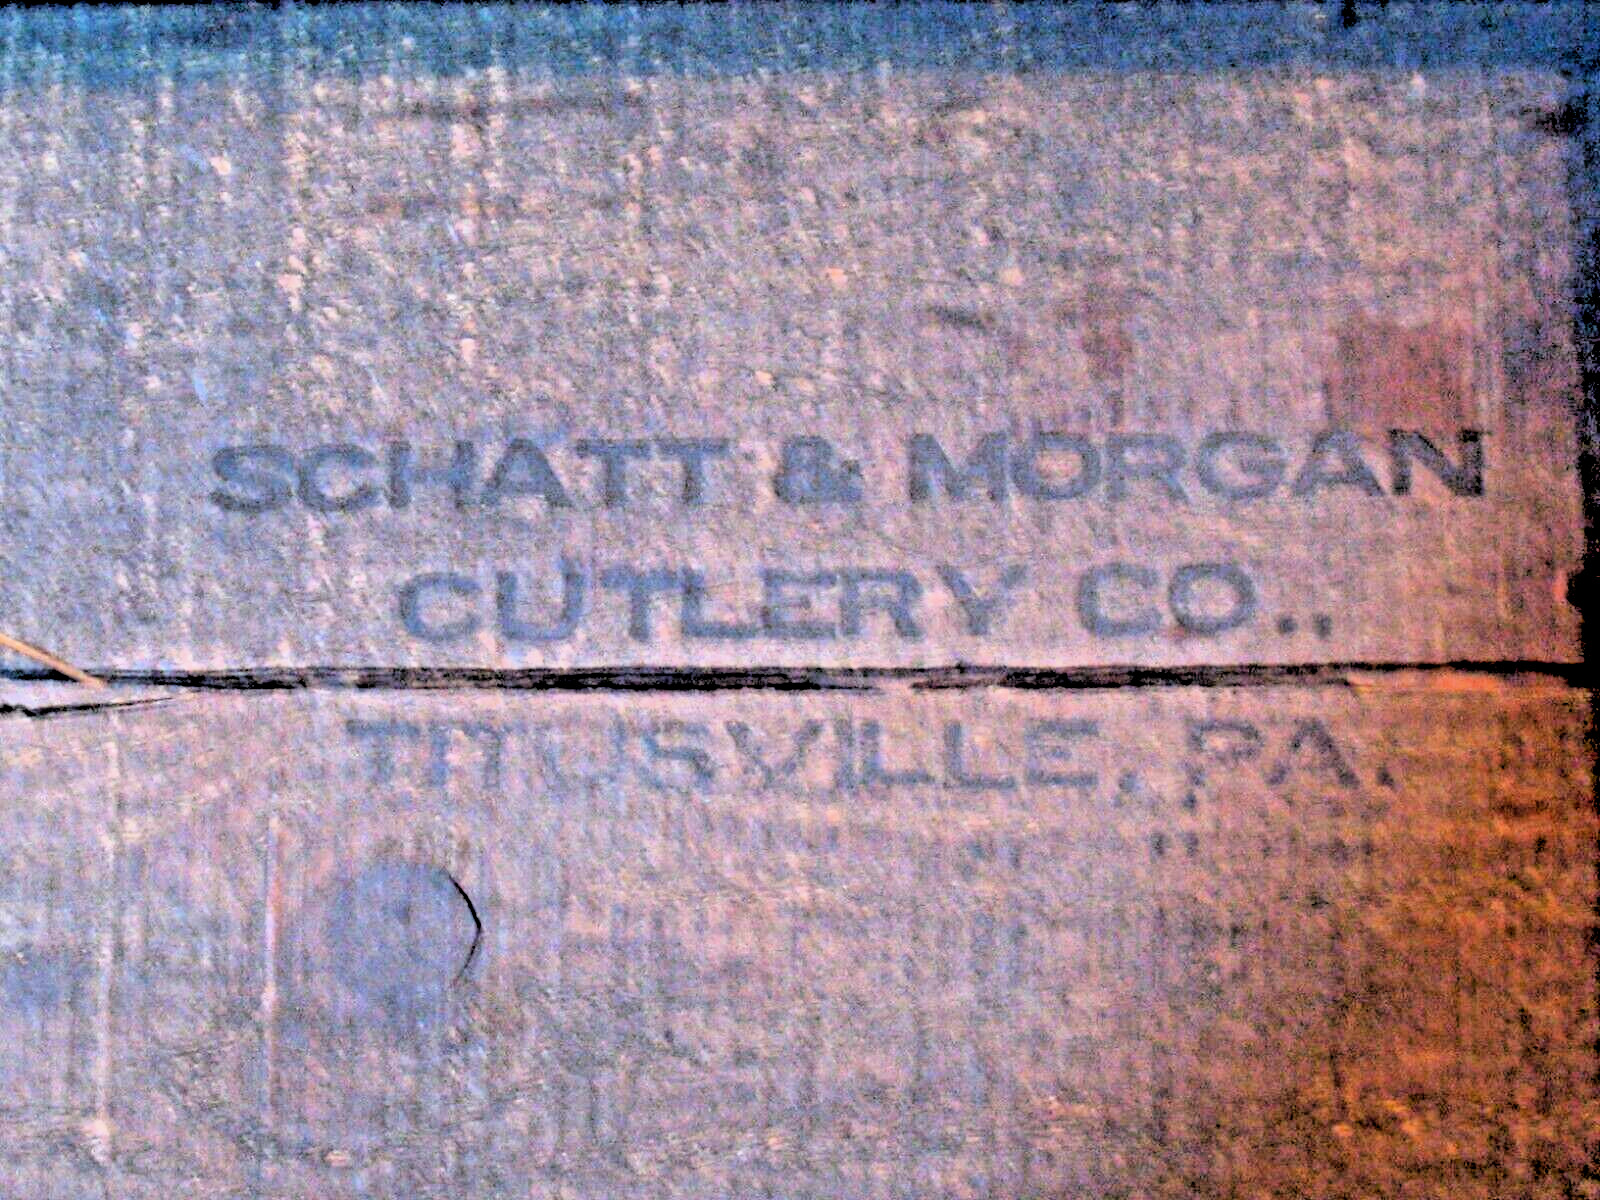 Vtg RARE SCHATT & MORGAN CUT CO TITUSVILLE Pa. Shipping Advertising Crate Box